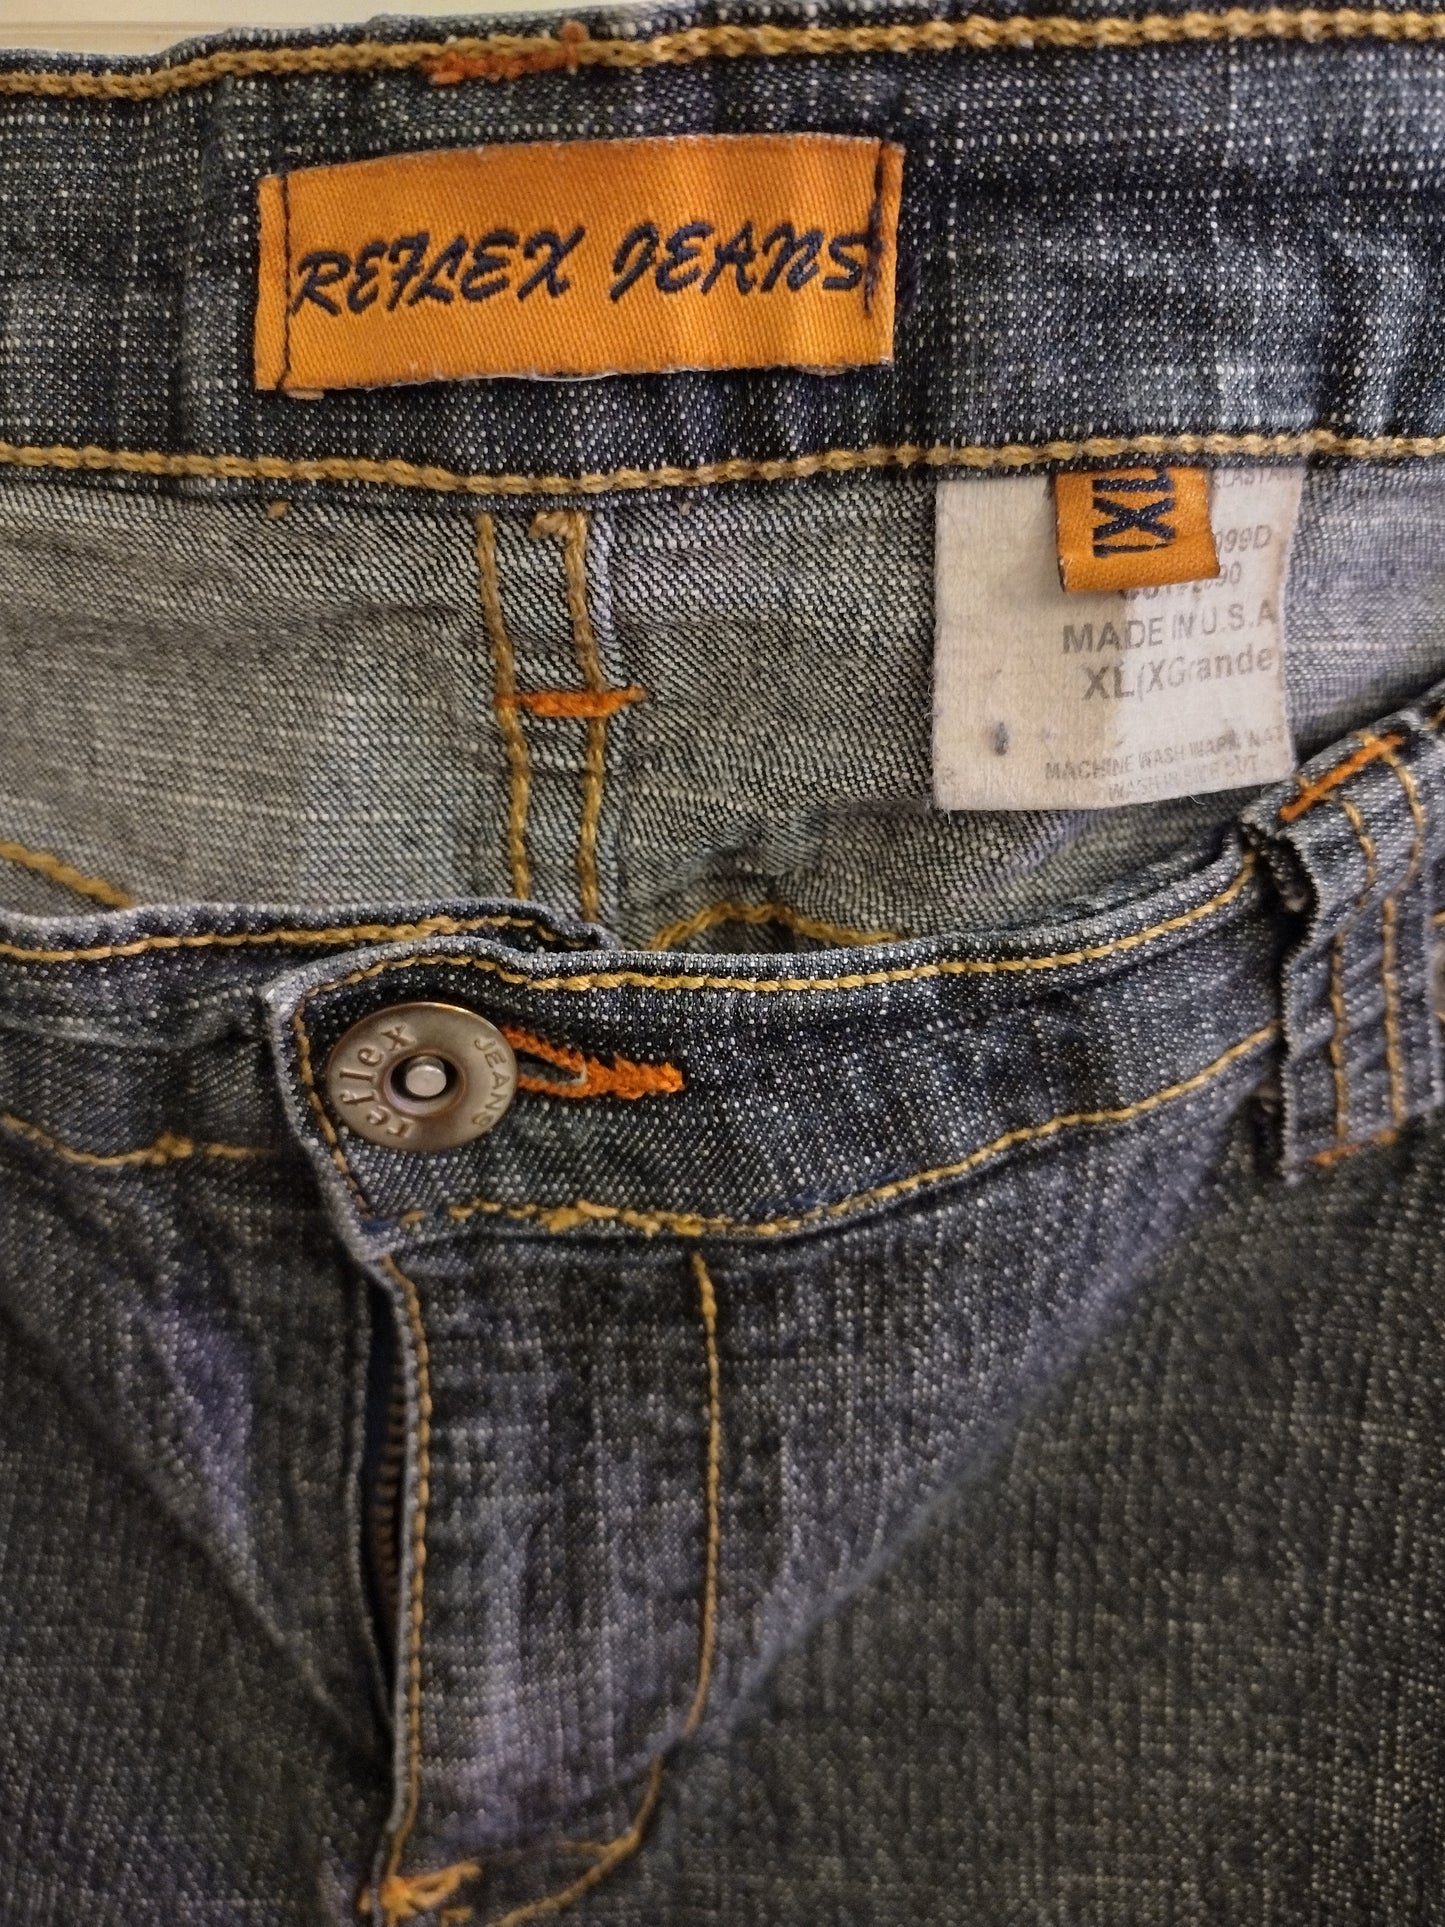 Reflex Pure, Rare + Extreme Women's Plus Size Jeans